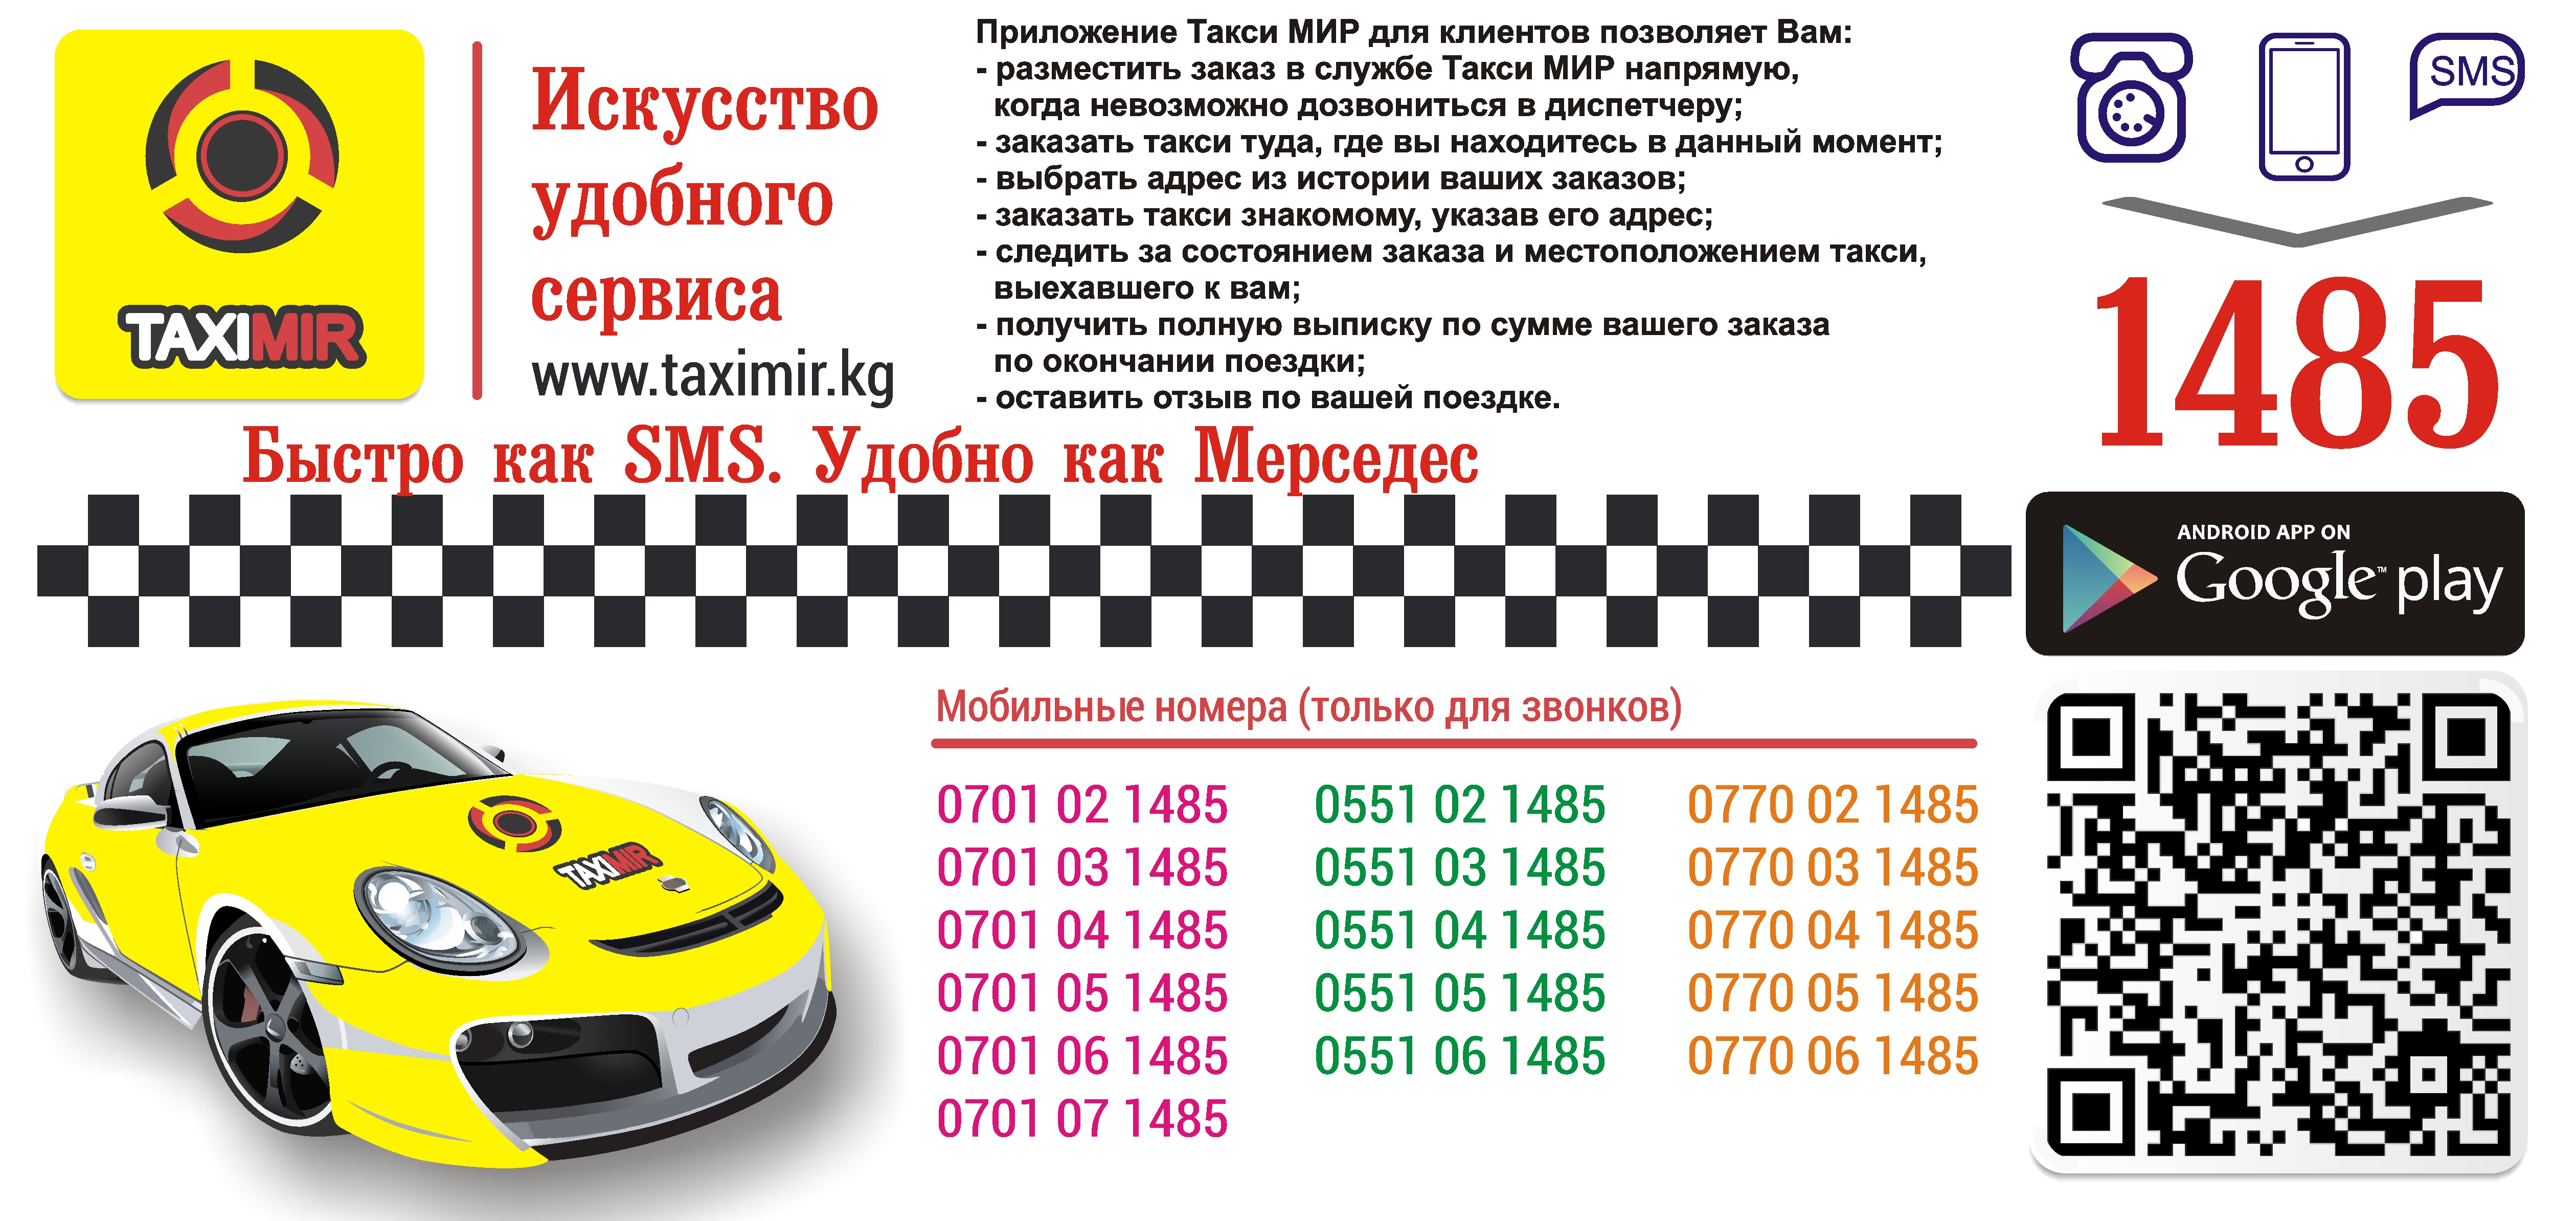 Номер такси пенза дешевое. Такси мир. Смс такси. Такси Бишкек номер.